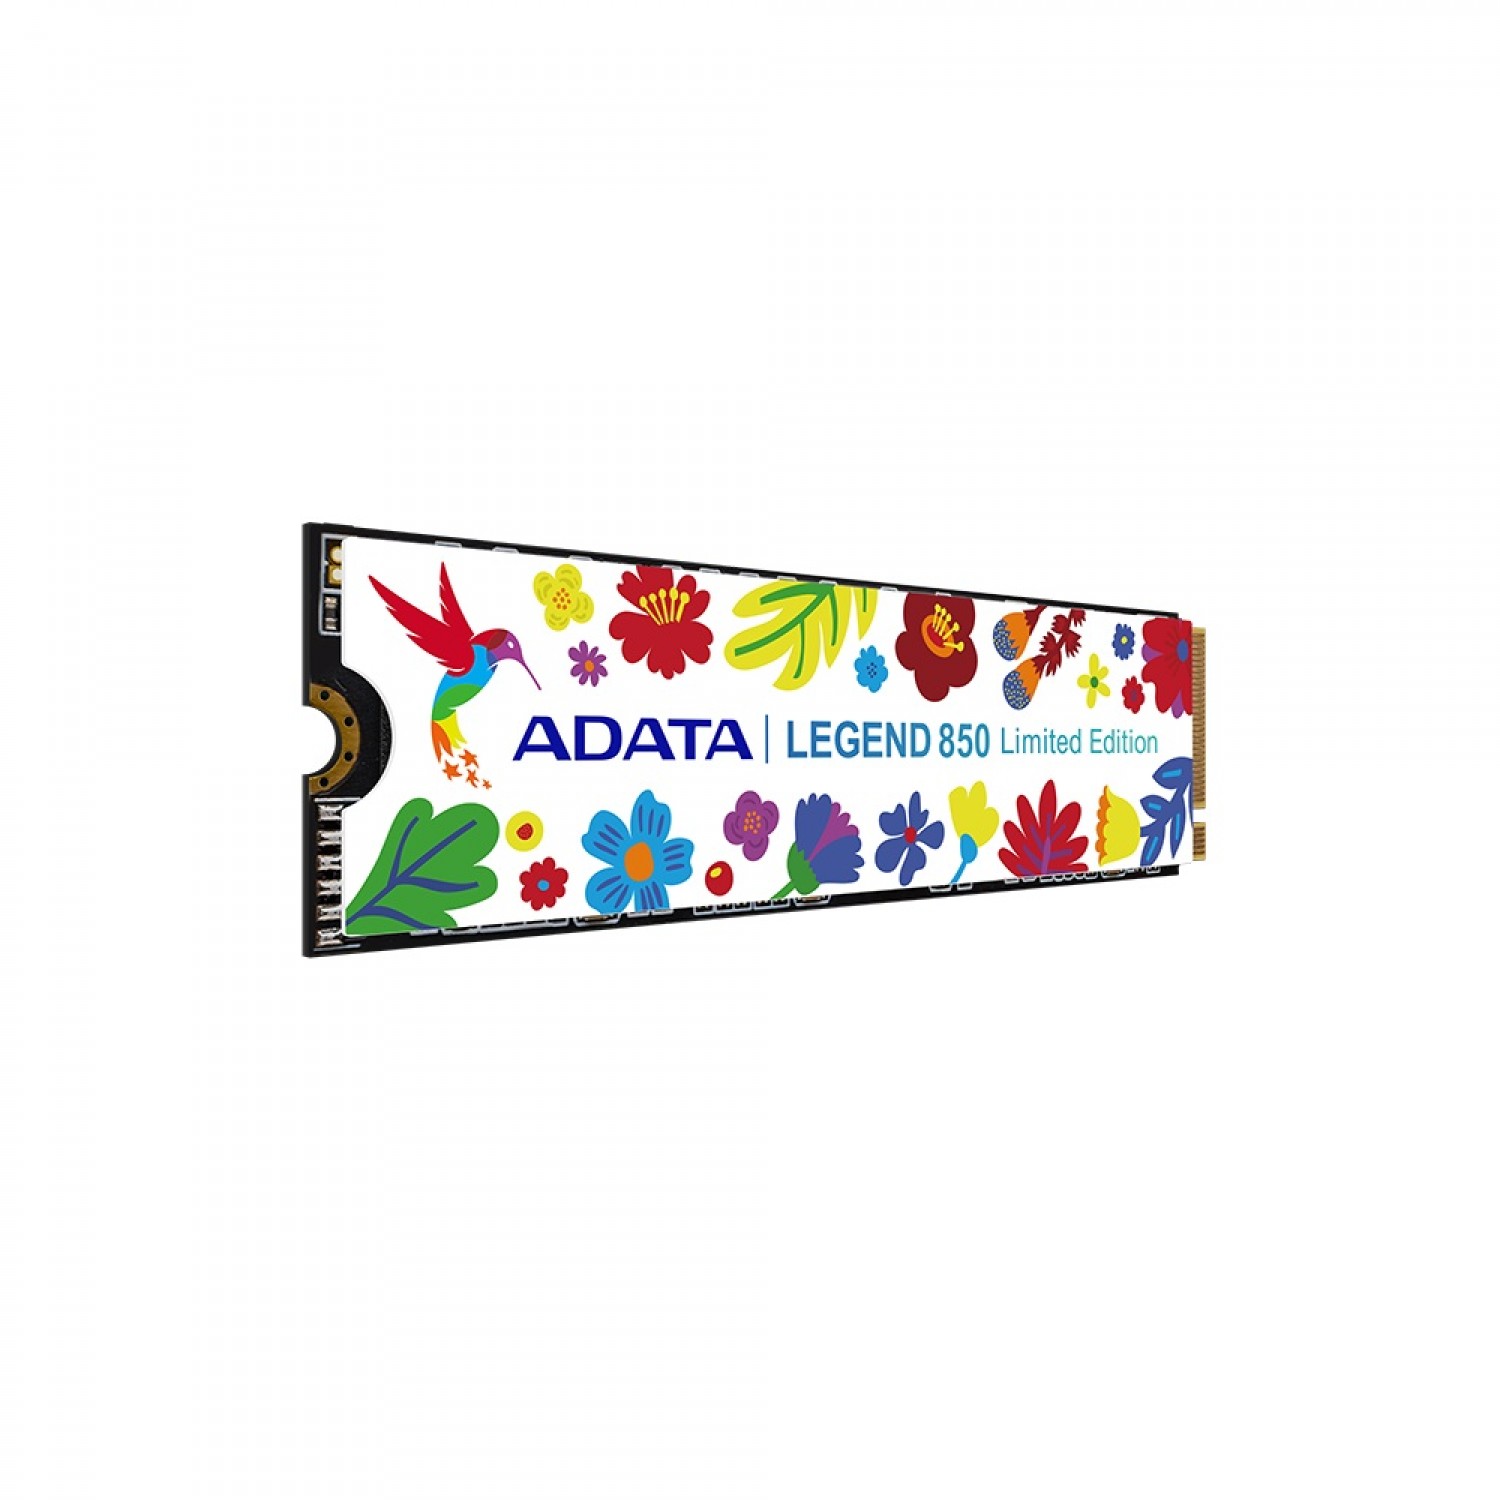 حافظه اس اس دی ADATA Legend 850 512GB Limited Edition-1